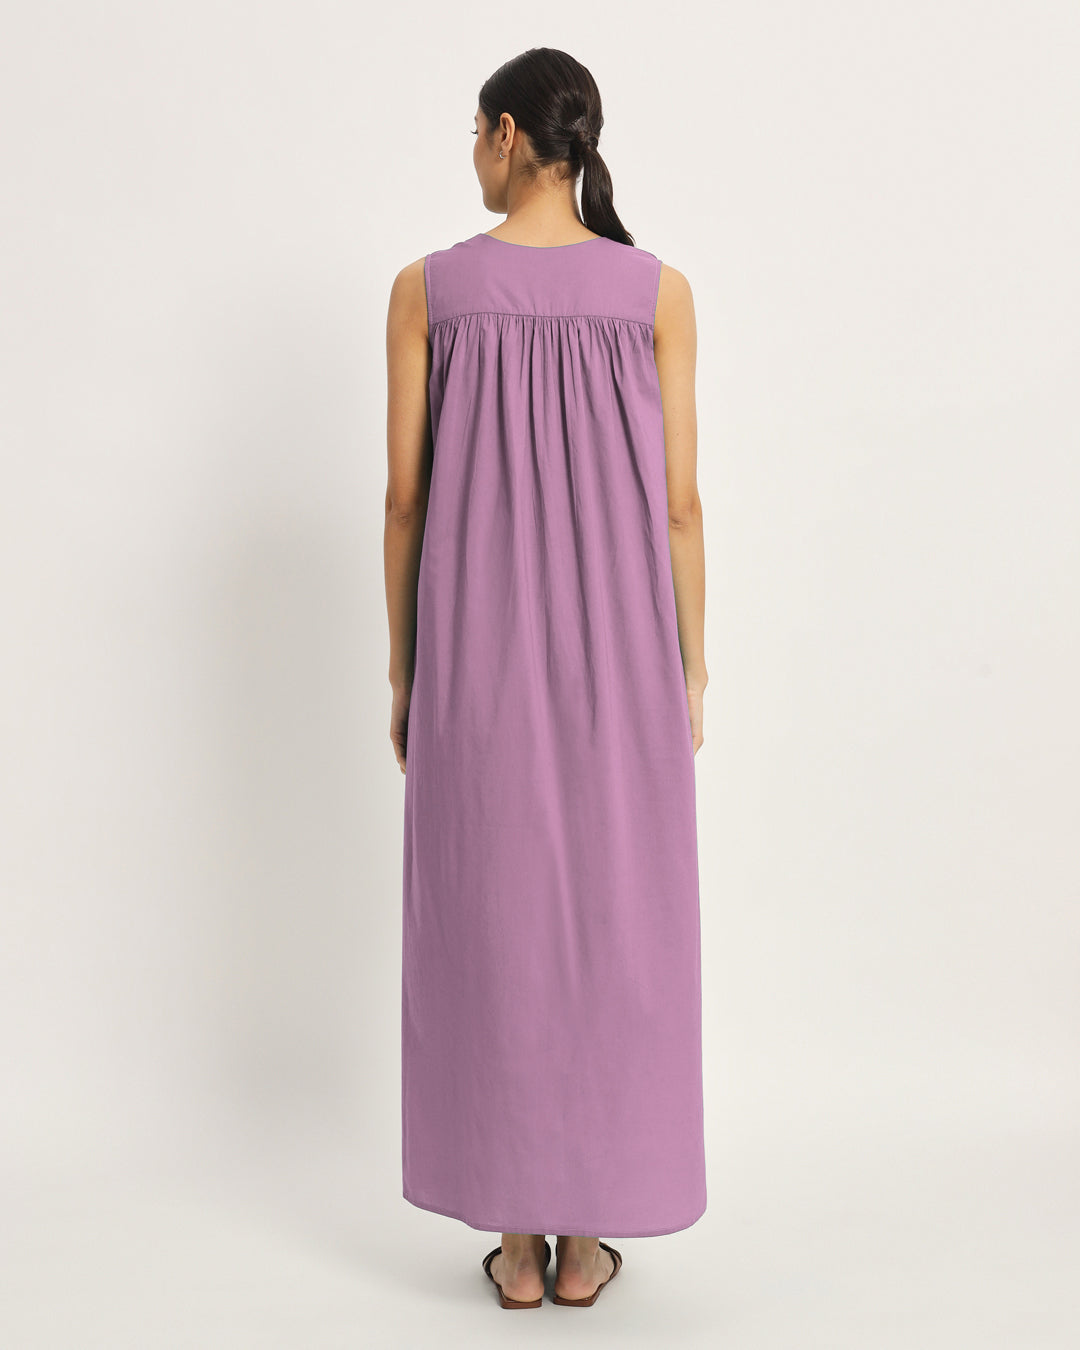 Combo: Iris Pink & Wisteria Purple Mommylicious Maternity & Nursing Dress